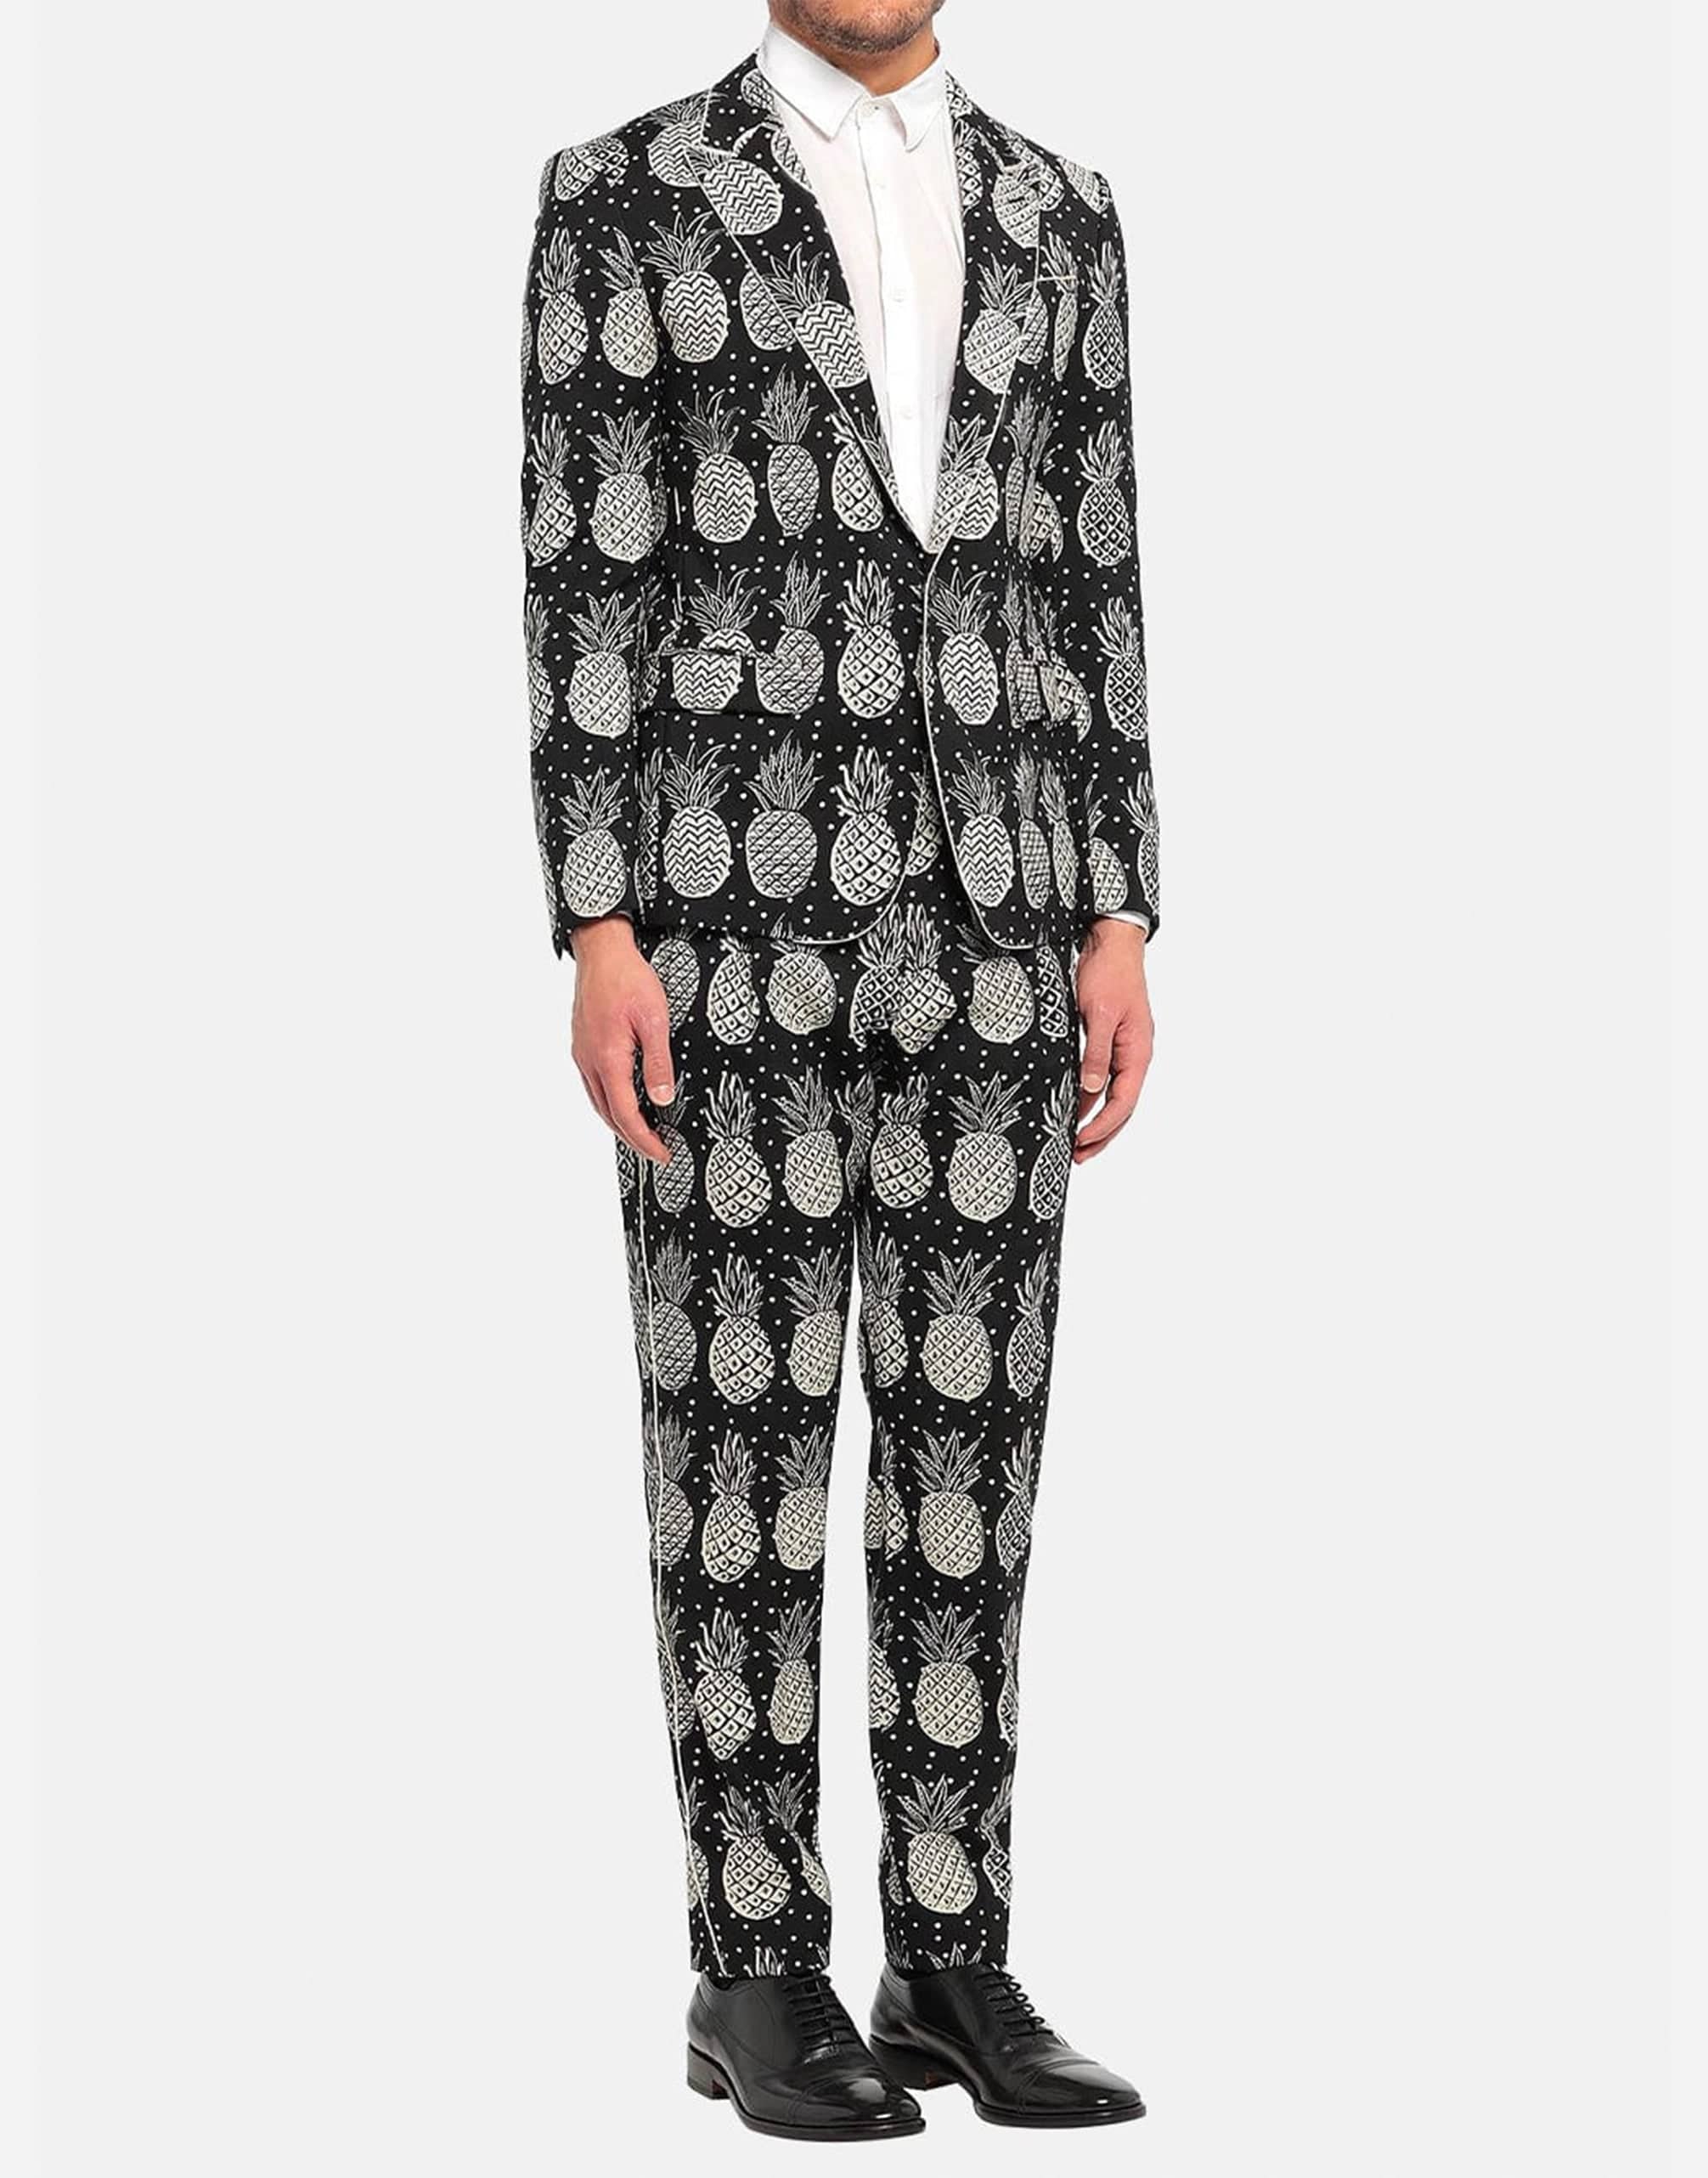 Dolce & Gabbana Pineapple Print Suit